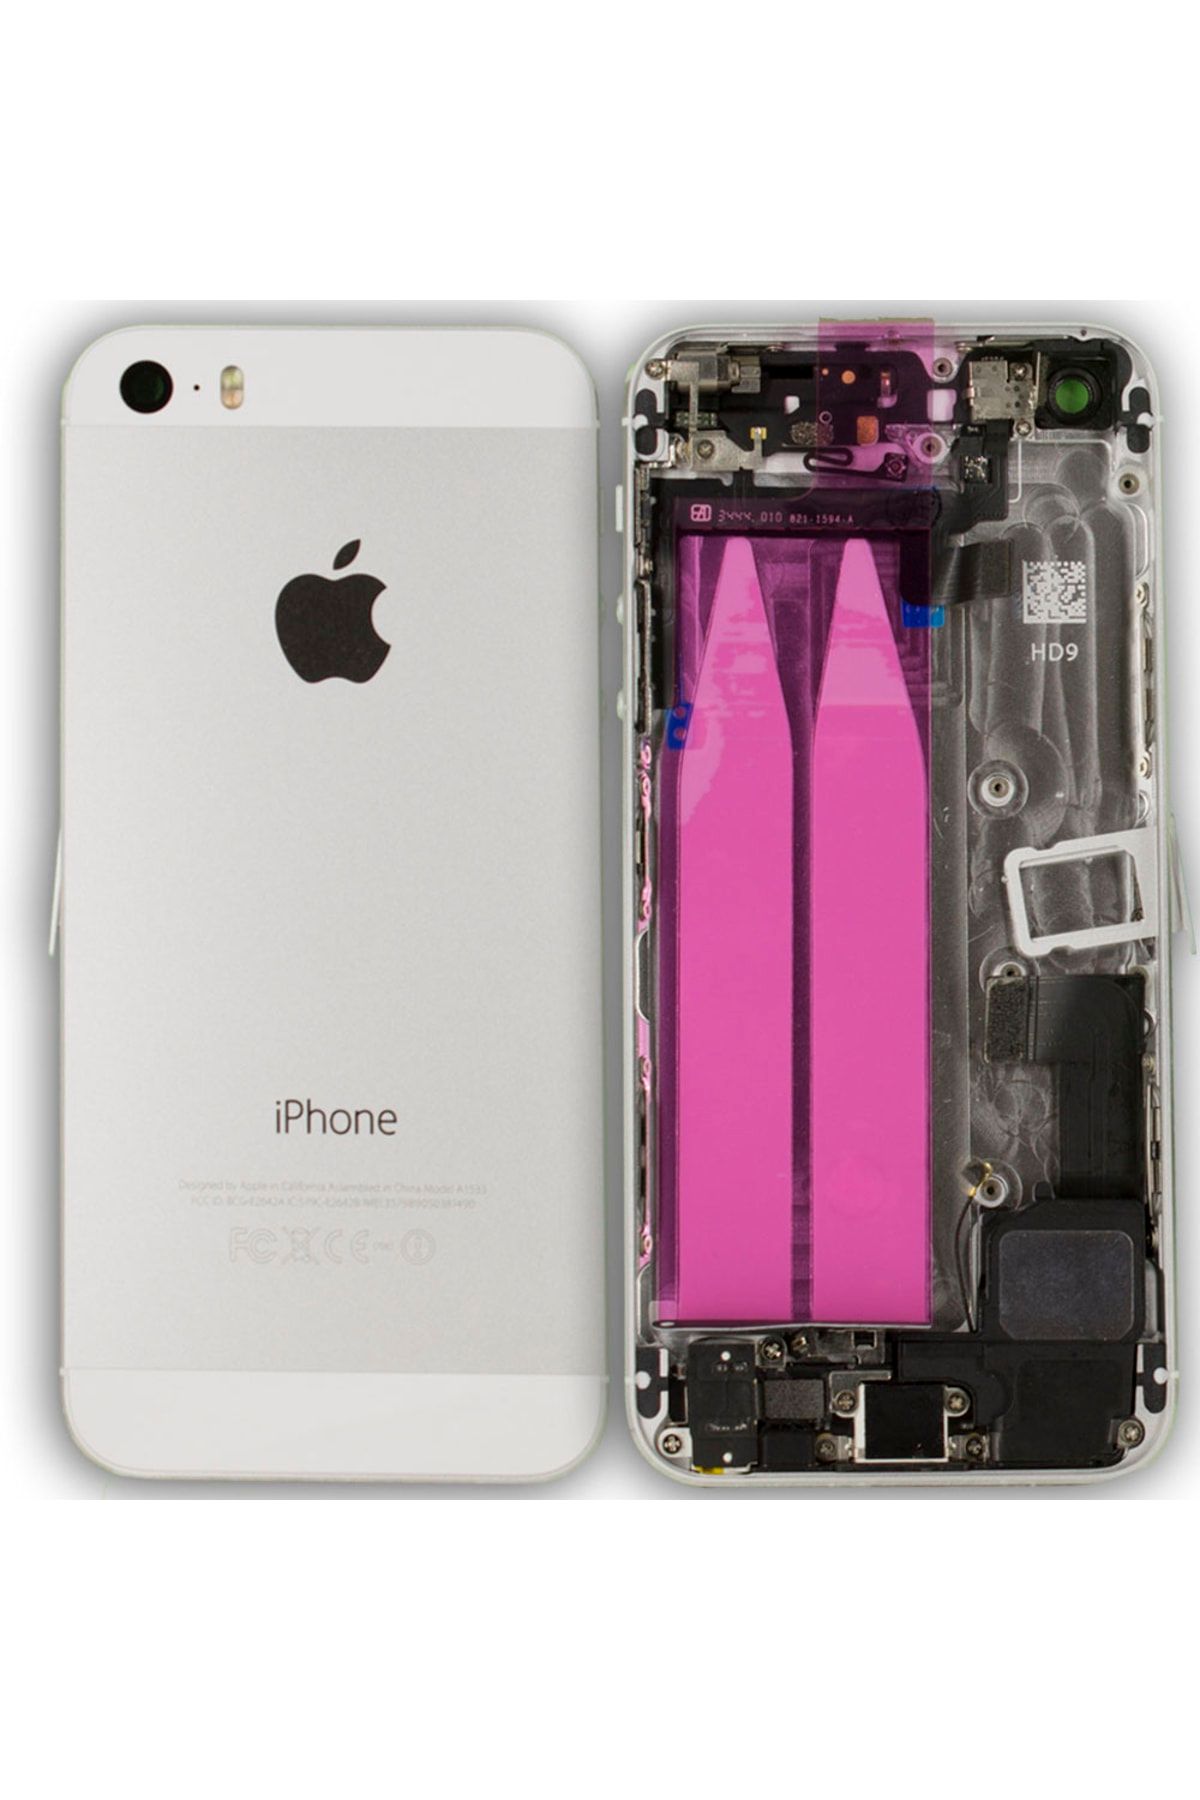 Genos Apple Iphone 5s Uyumlu Kasa Dolu Beyaz